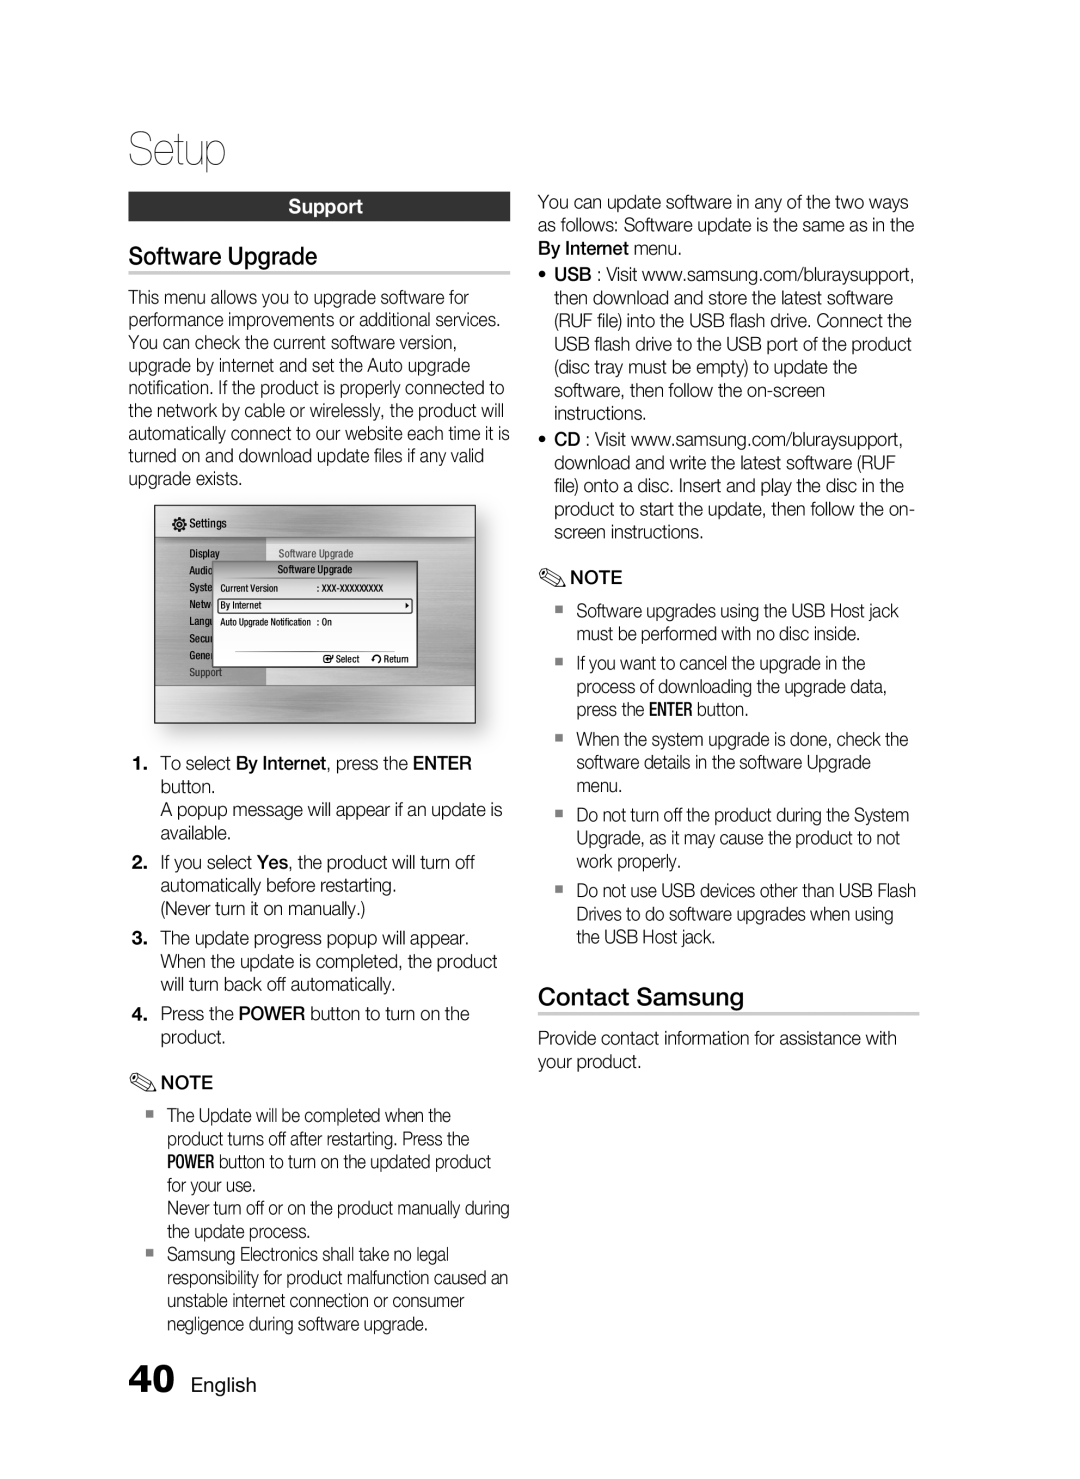 Samsung HT-C5200 user manual Software Upgrade, Contact Samsung, Support, English, Setup 